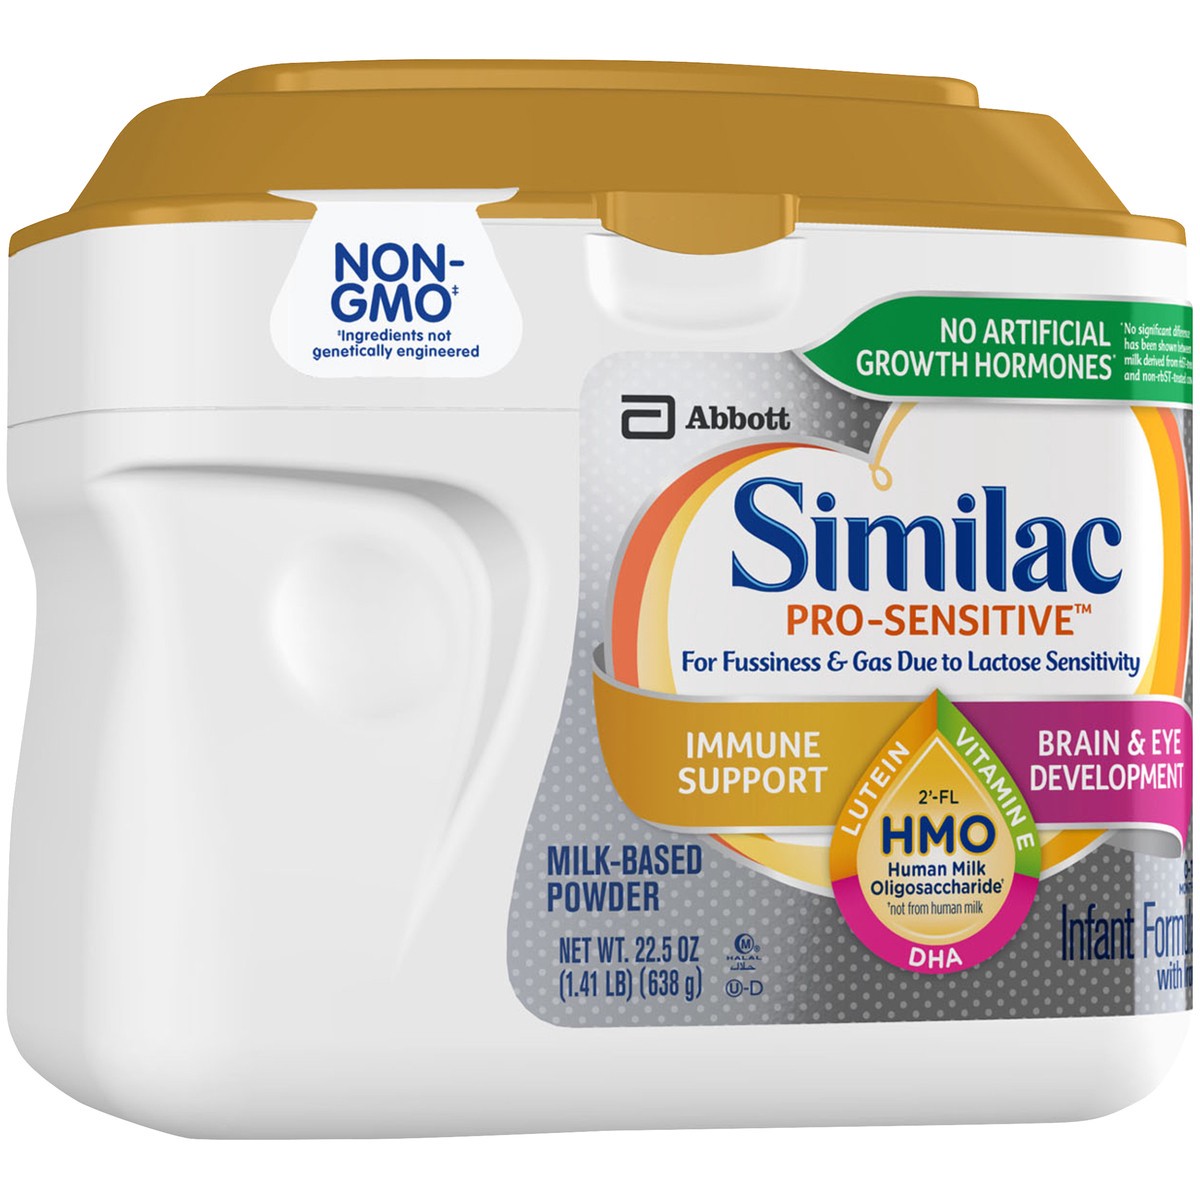 slide 5 of 14, Similac Pro-Sensitive Infant Formula with 2''-FL Human Milk Oligosaccharide* (HMO) for Immune Support, 22.5 ounces, 22.5 oz